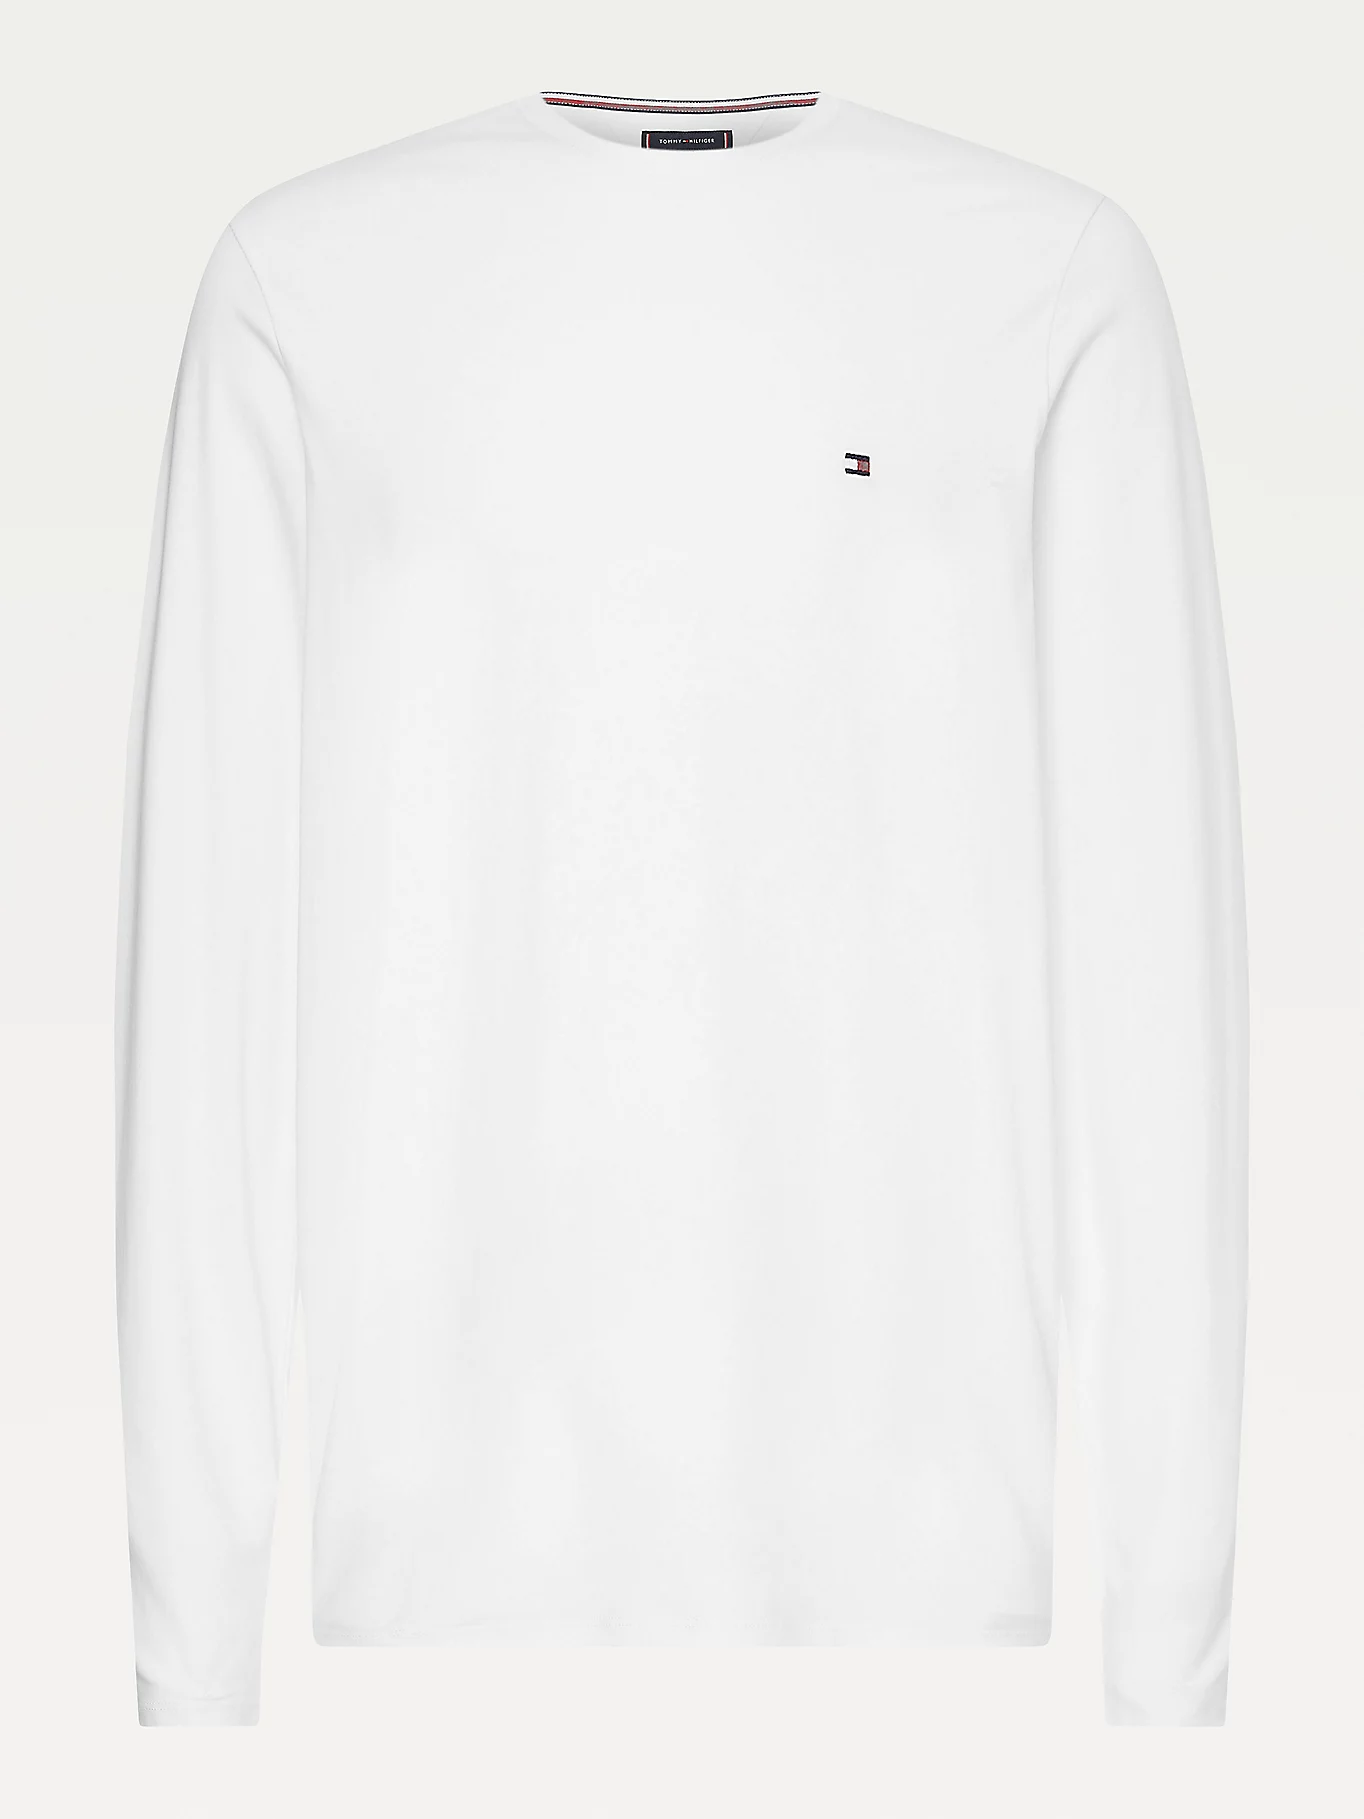 Professor fugl mistænksom Buy Tommy Hilfiger Long Sleeve T-shirt White - Scandinavian Fashion Store